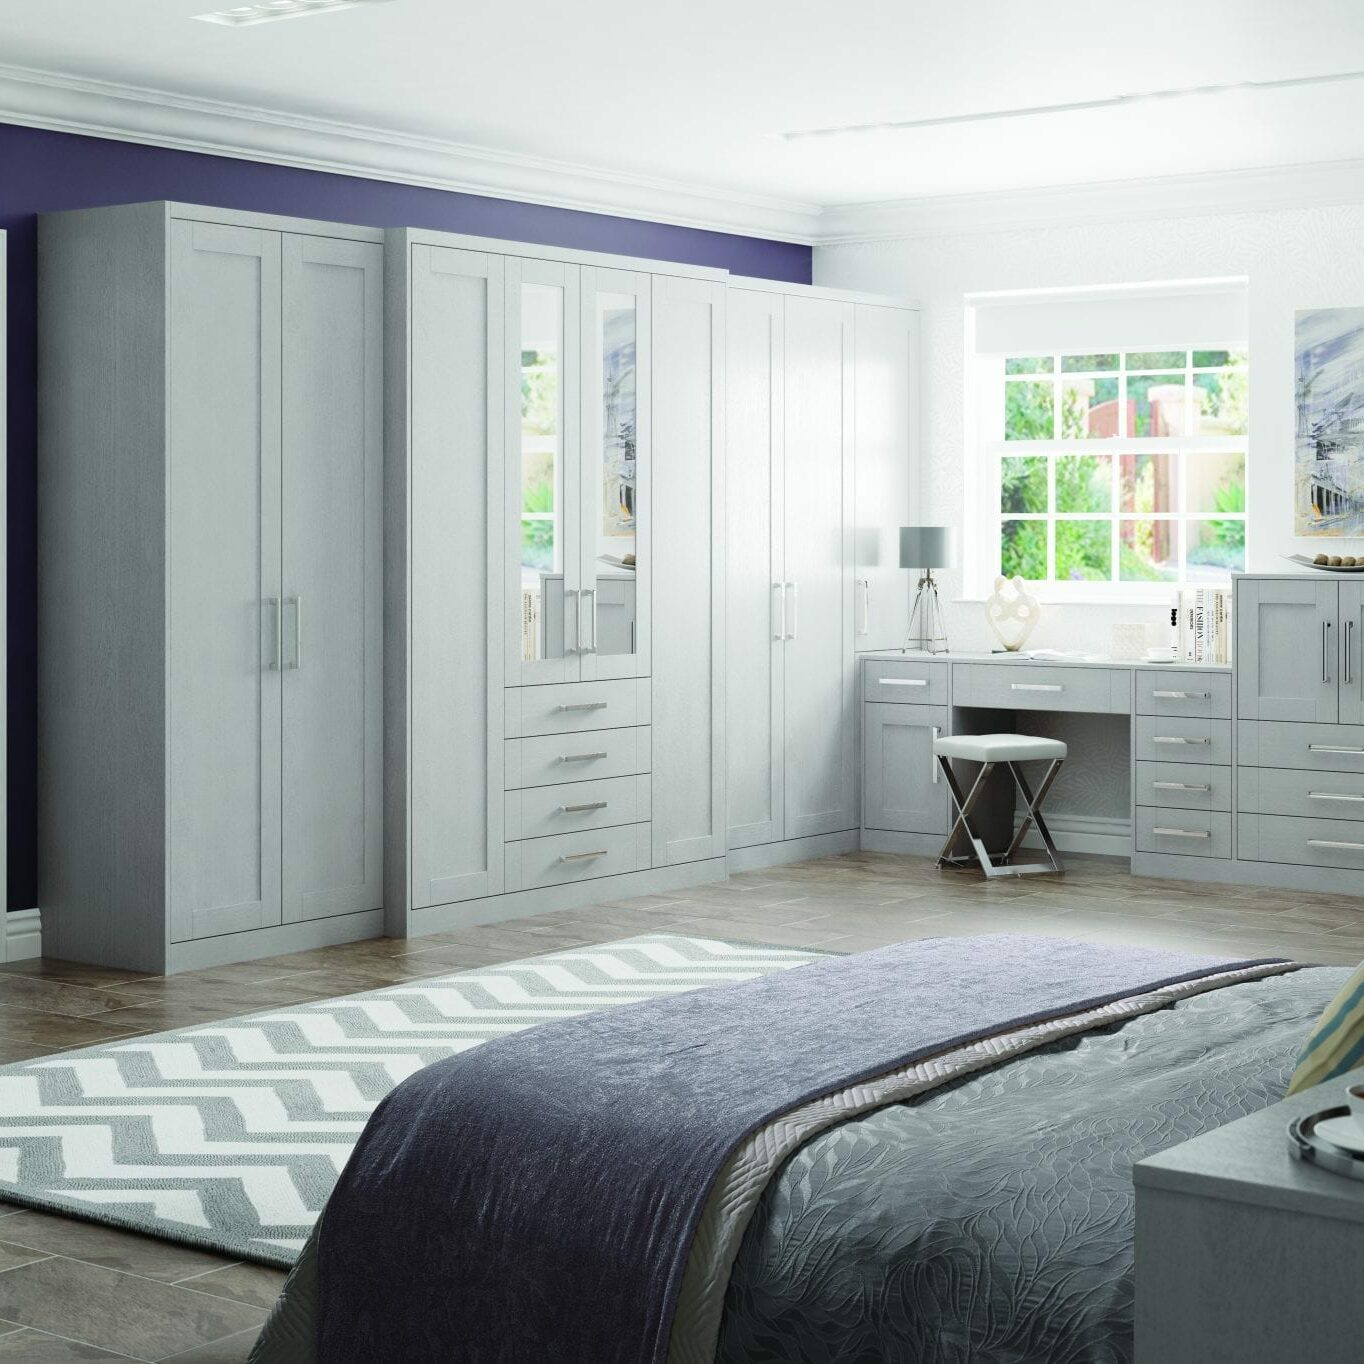 Holton storm bedroom in grey